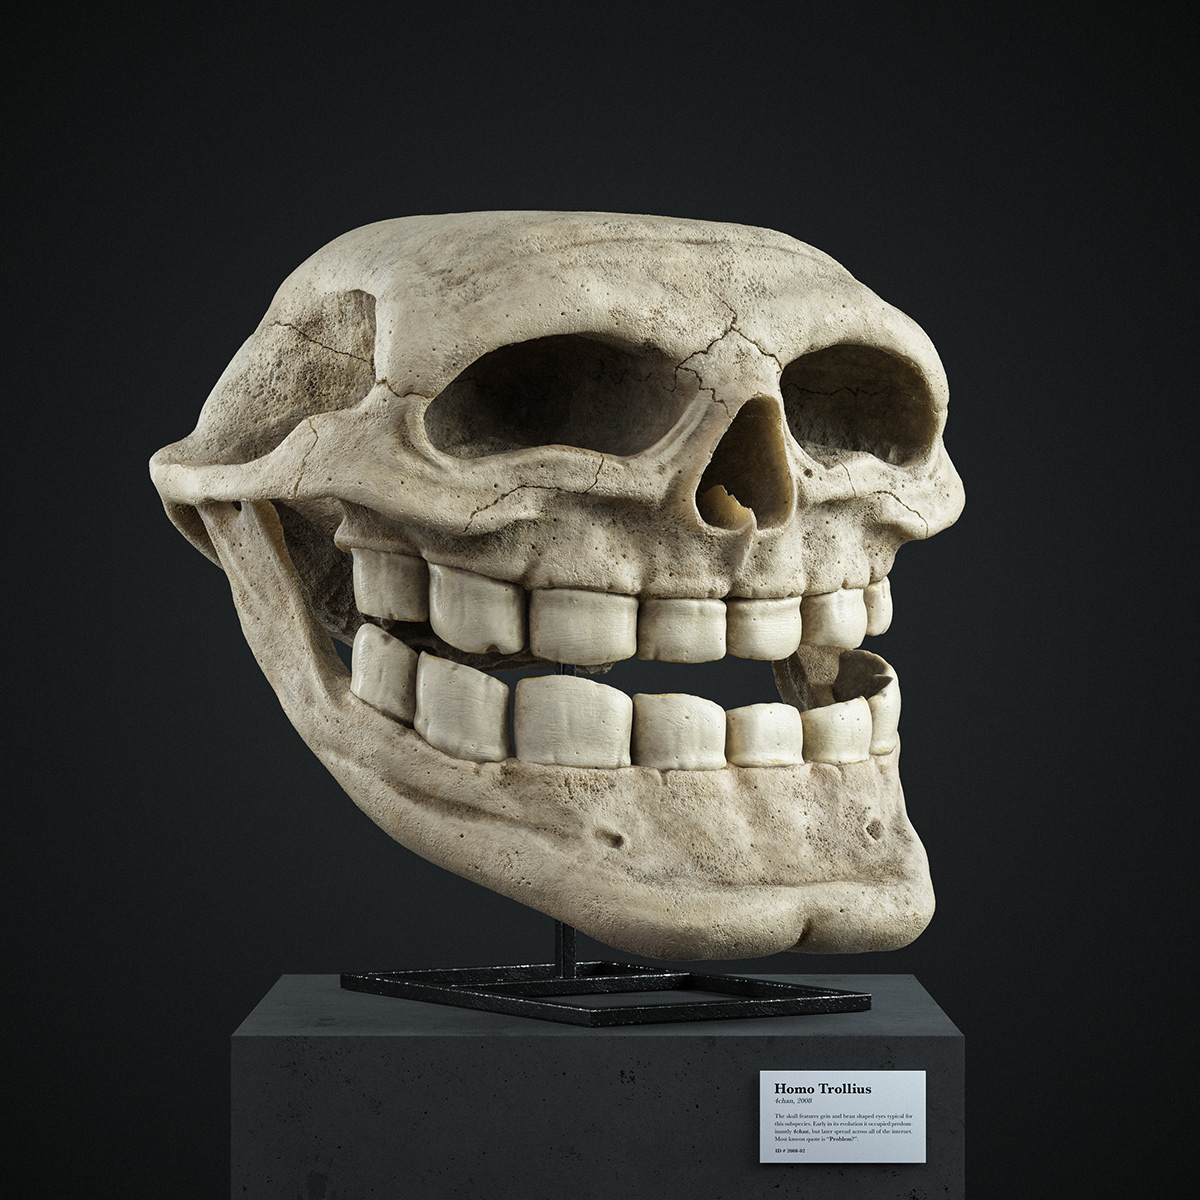 #3D #anatomy #Cinema4D #meme #realistic  #render #skull octane